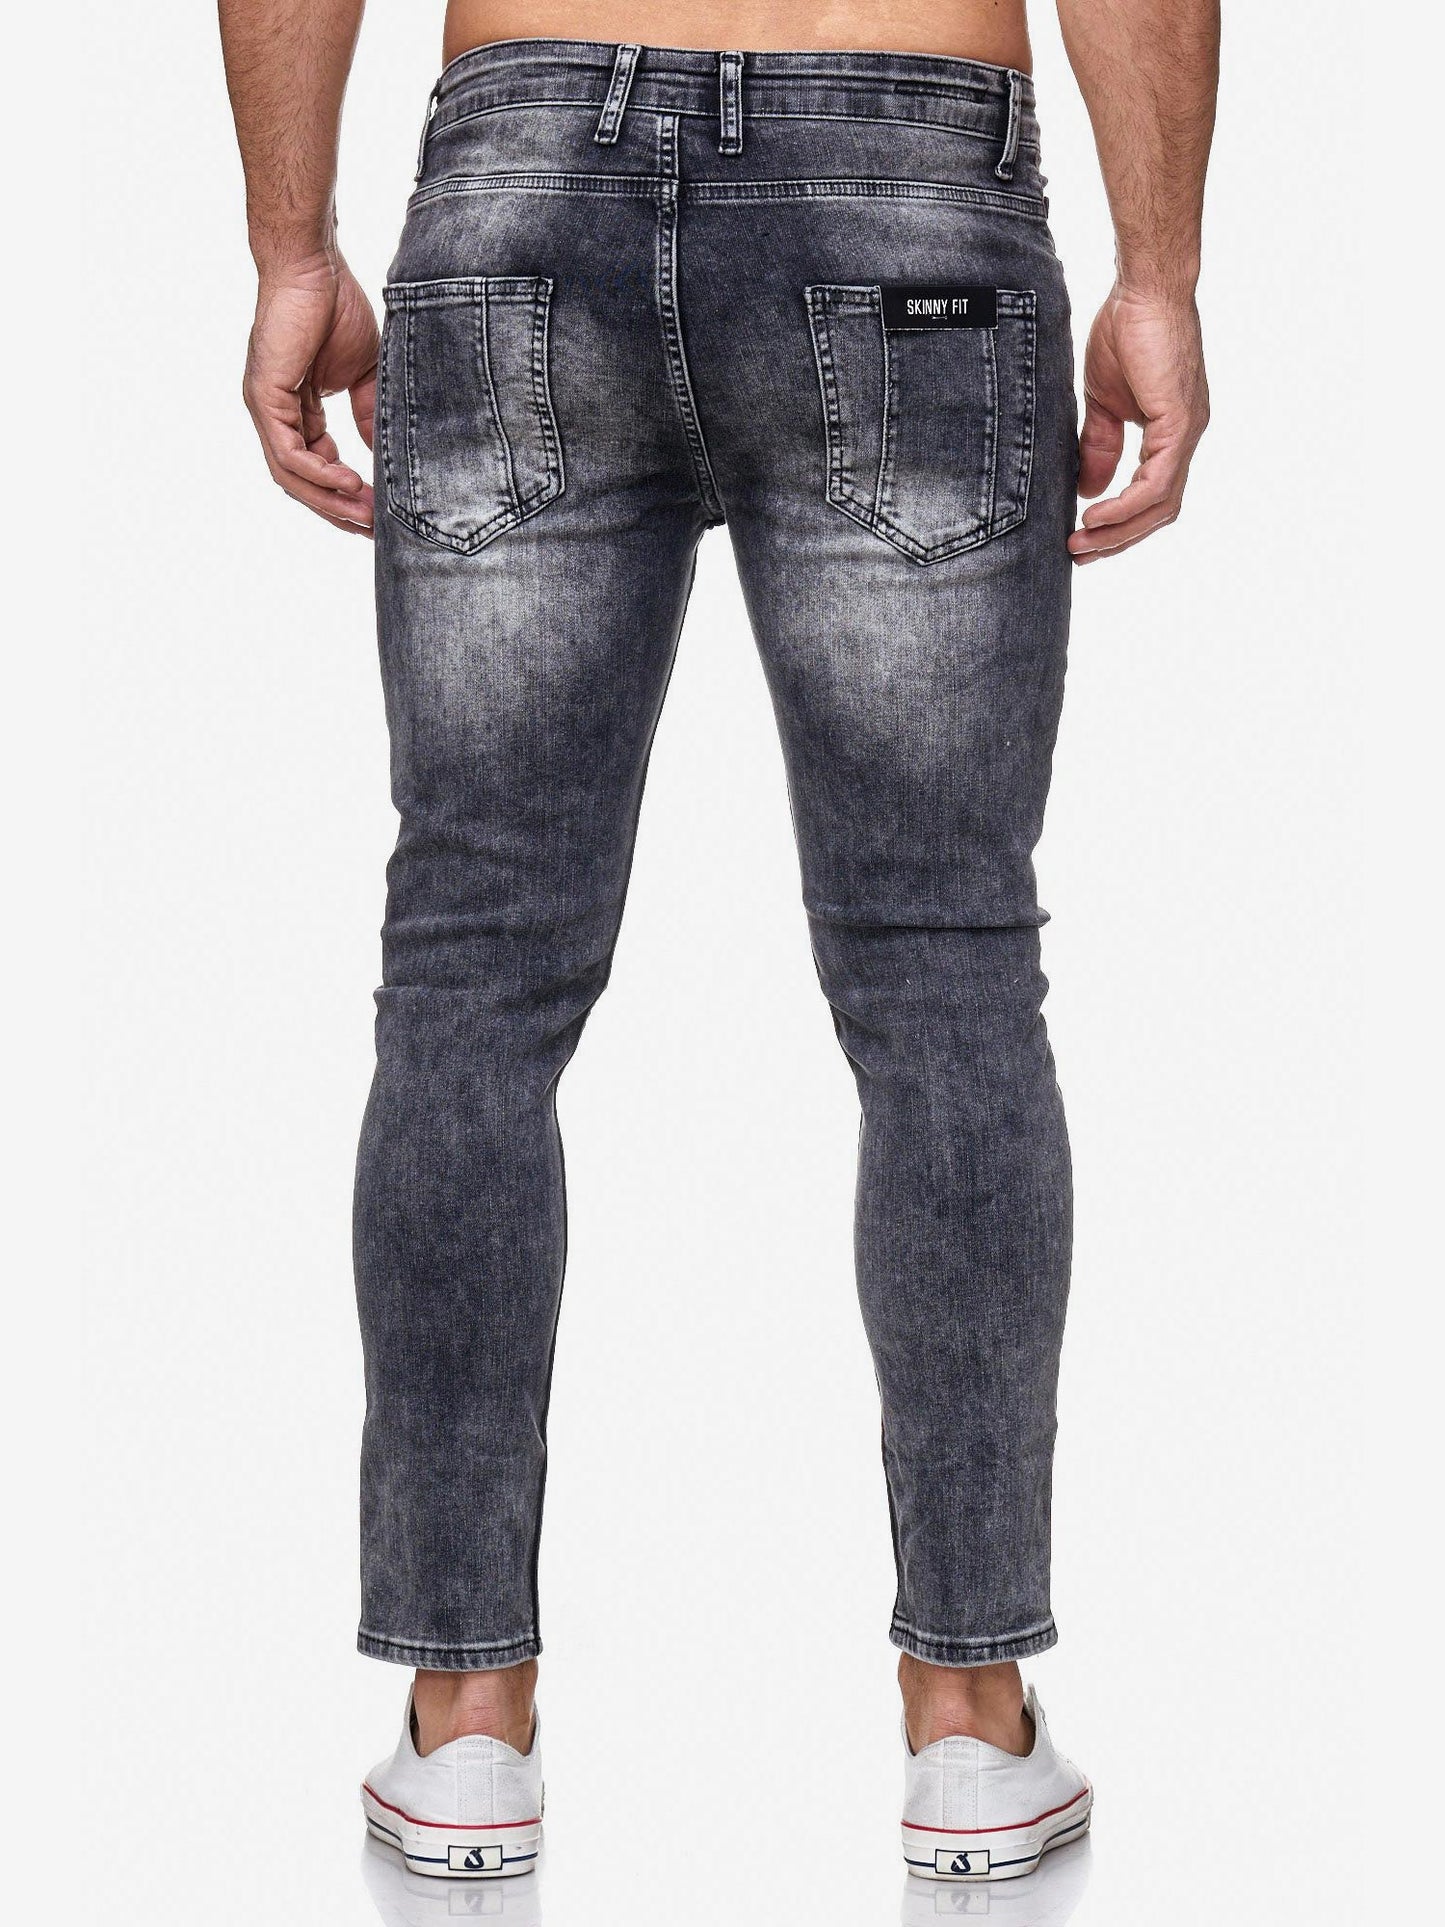 Tazzio Herren Jeans Skinny Fit 17516